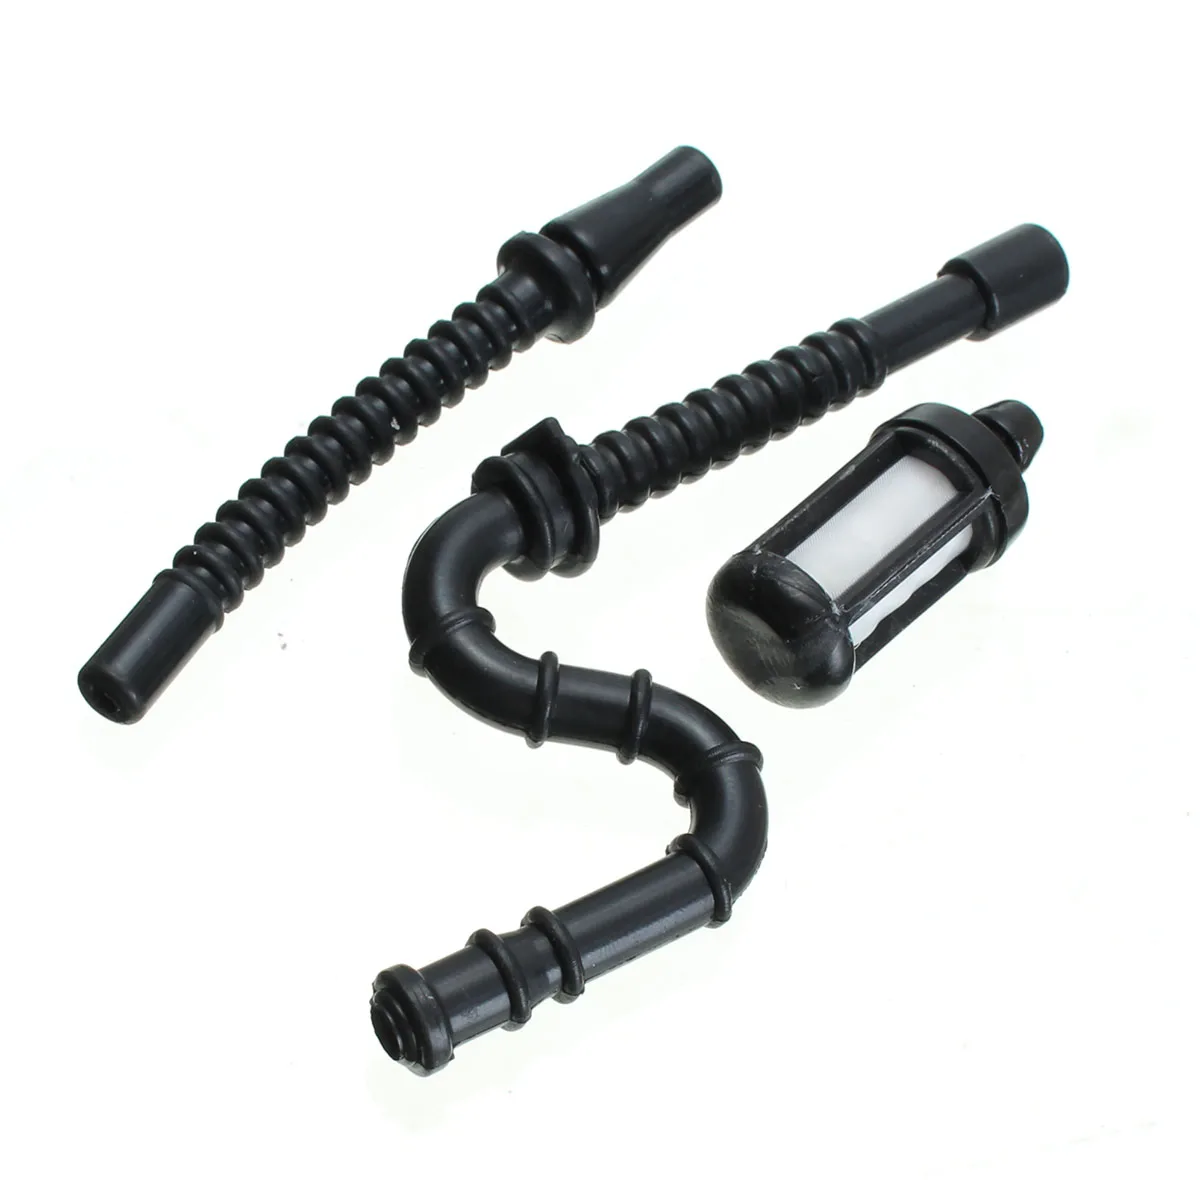 

Gas Fuel Oil Hose & Filter & Impulse Line Set For Stihl MS260 Model 024 026 Chainsaw